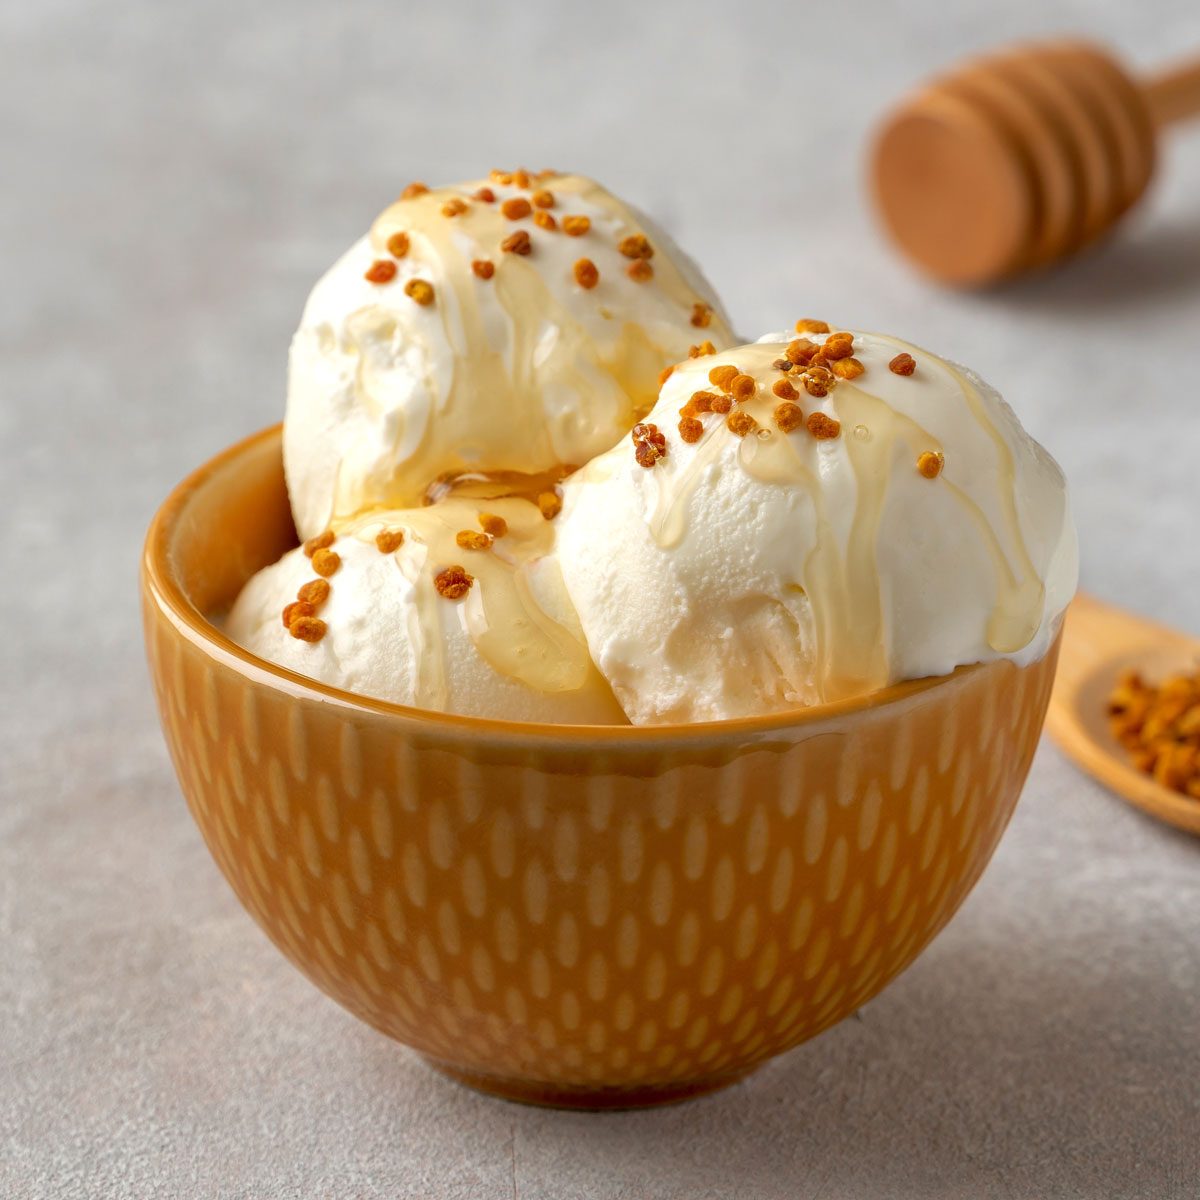 Tasty Vanilla Ice Cream With Bee Pollen And Honey In Bowl